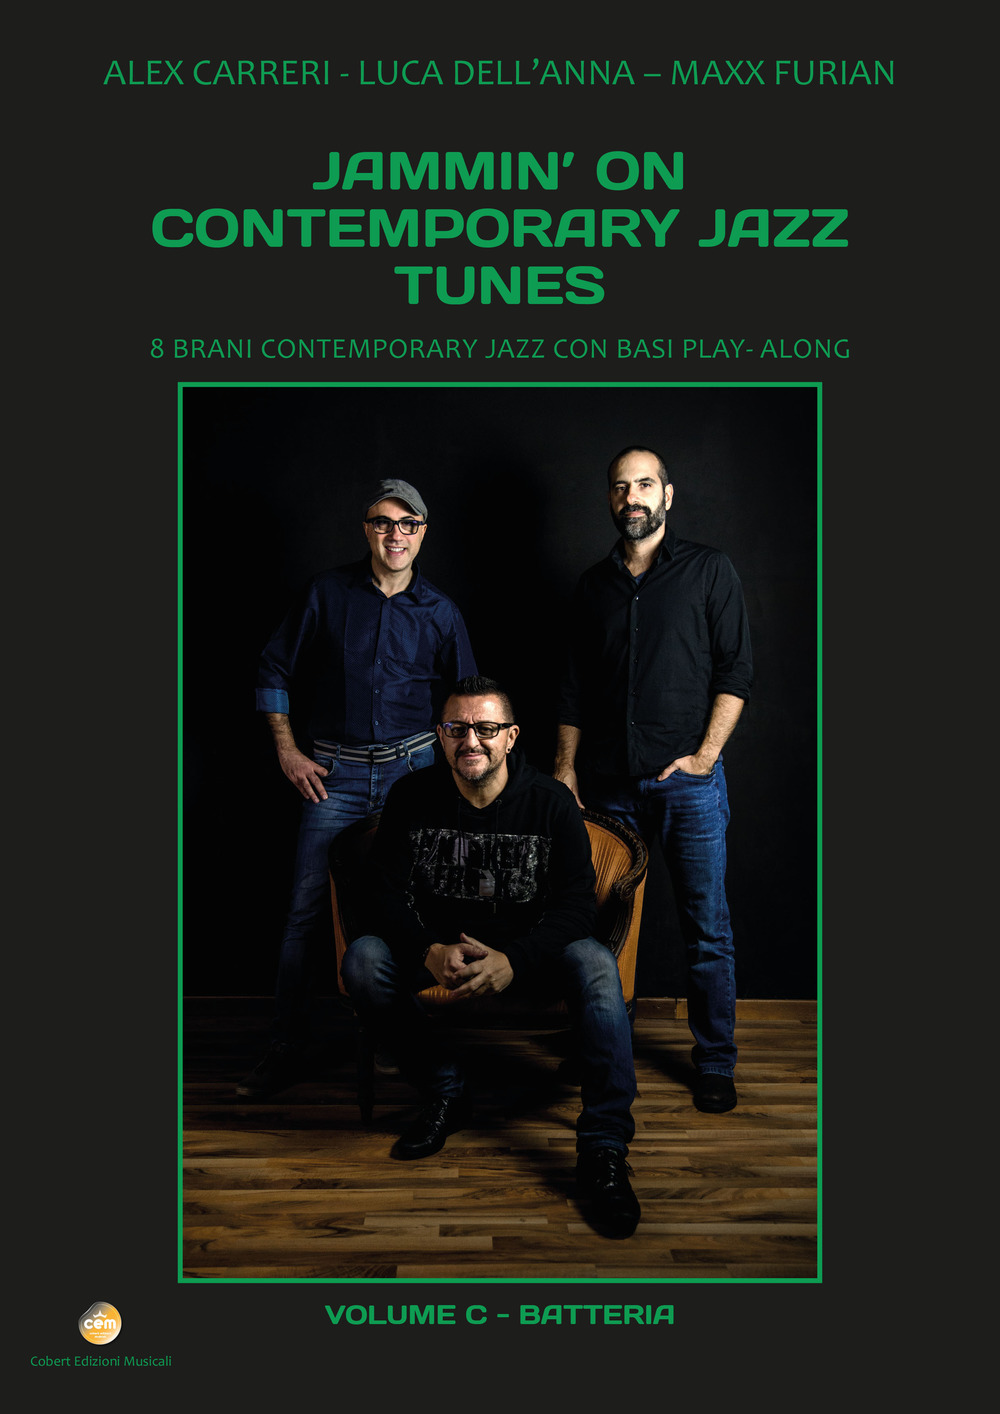 Jammin' on contemporary jazz tunes. 8 brani contemporary jazz con basi play-along. Vol. 3: Batteria